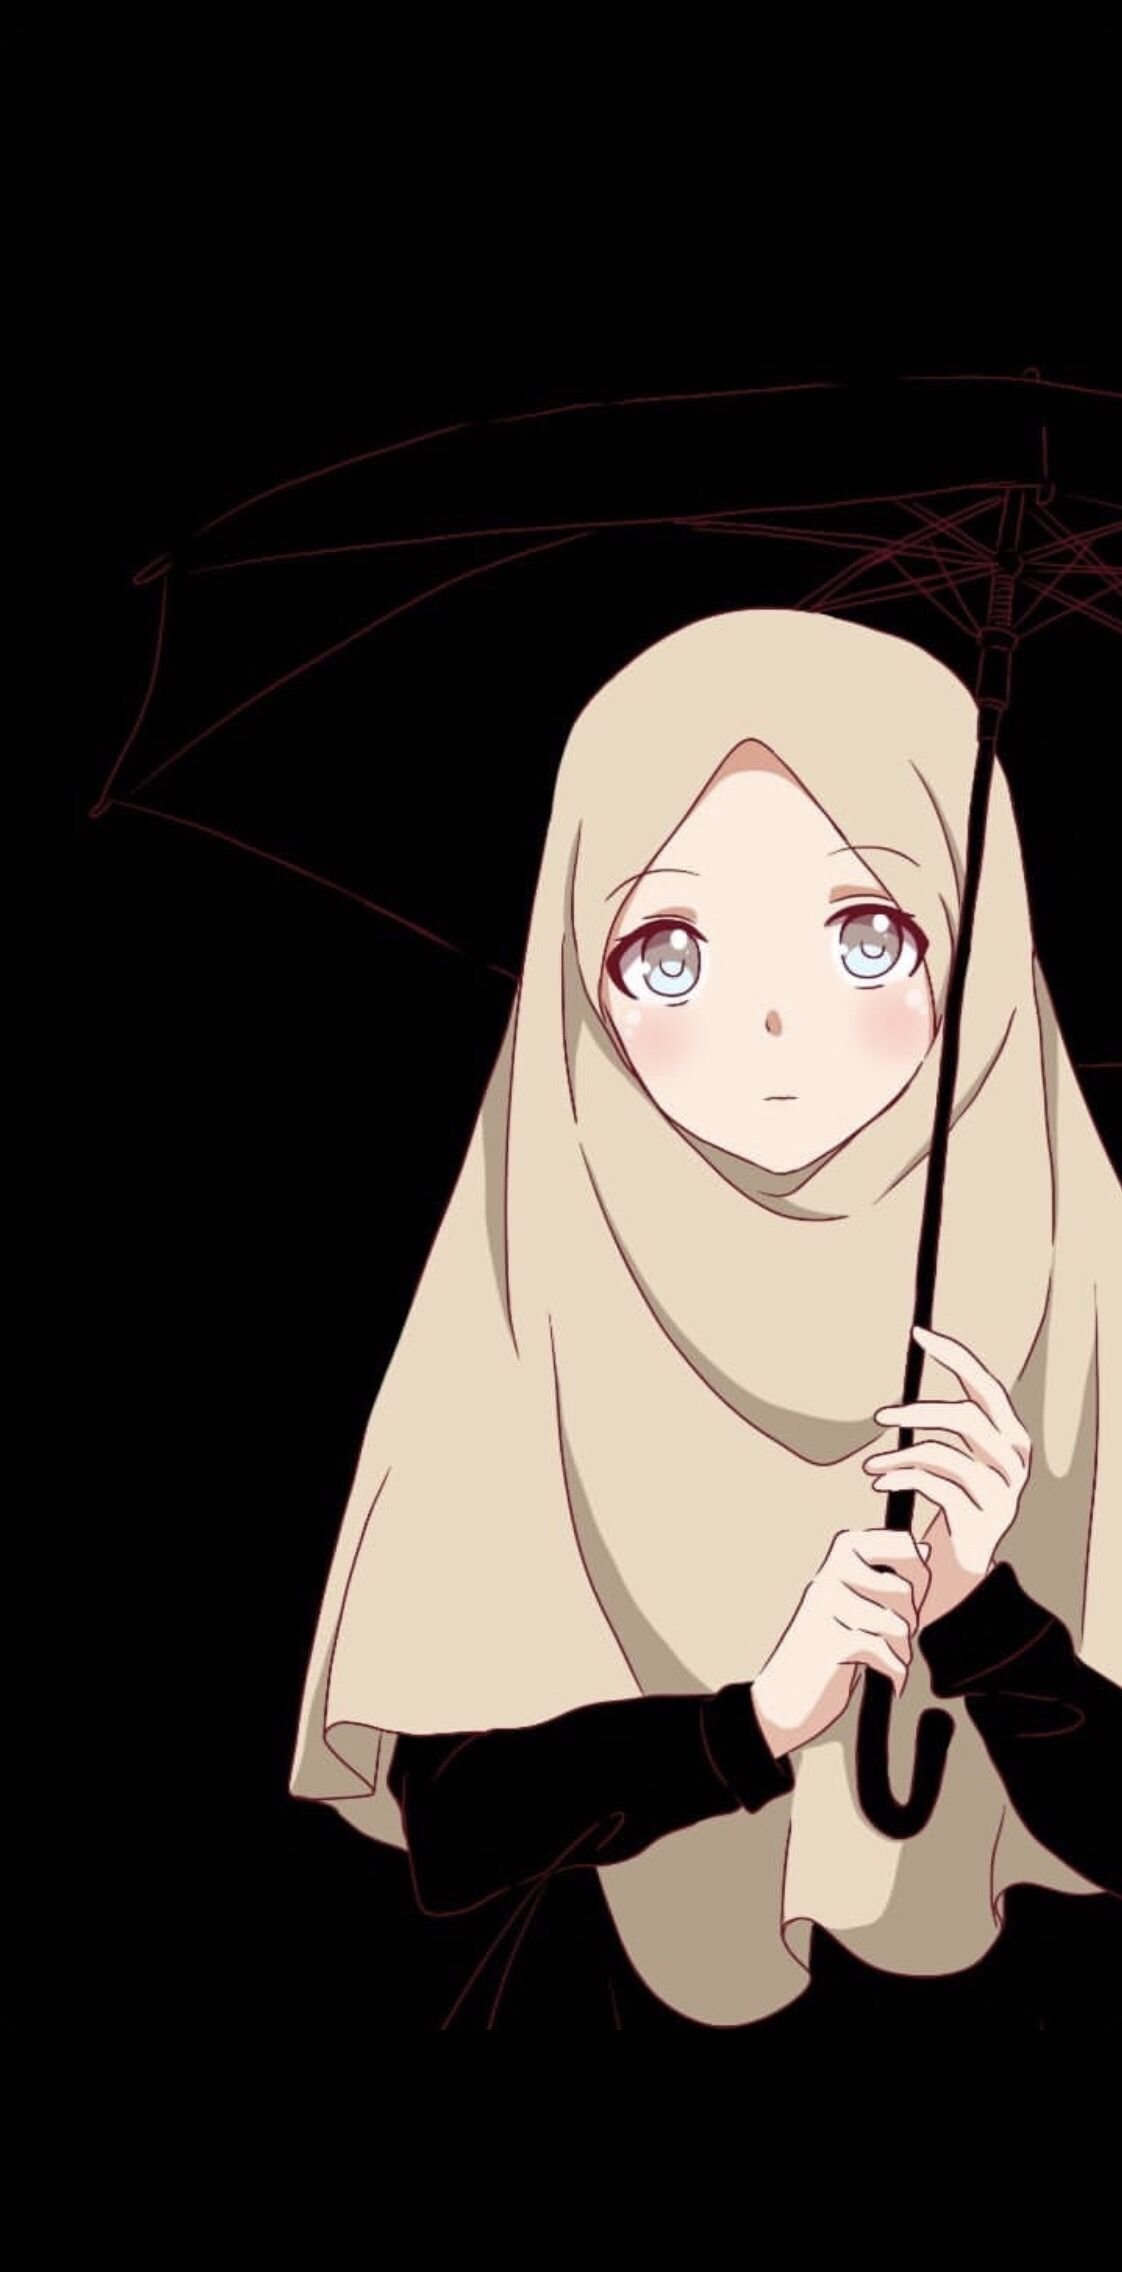 Download Muslim Girl Cartoon Profile Picture